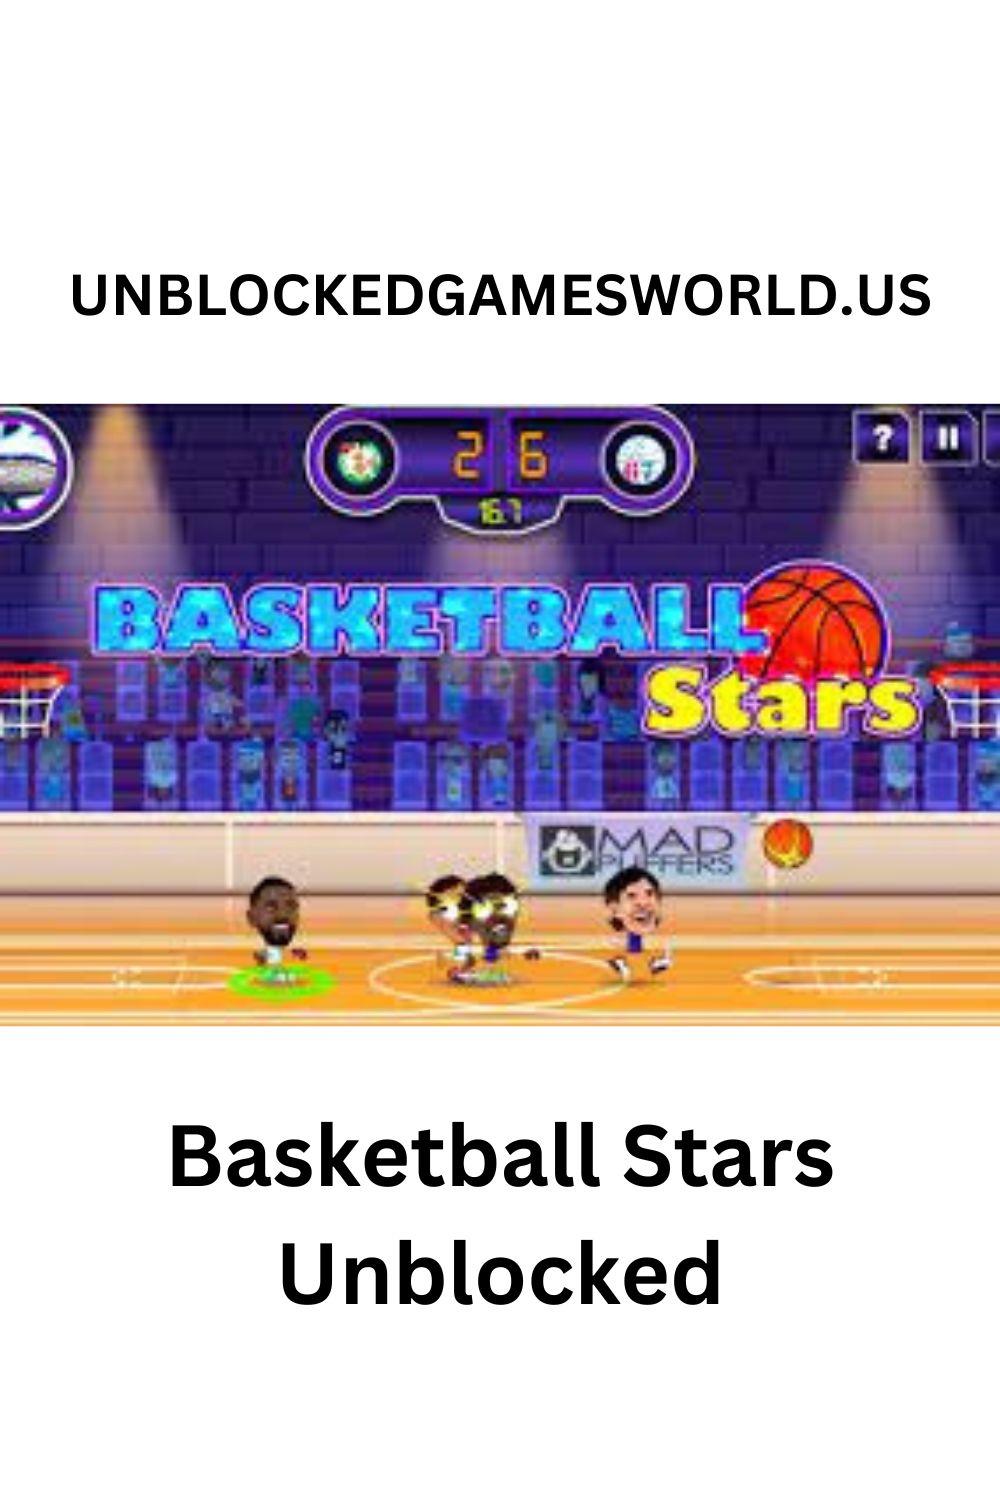 Unblocked Games World (@Un_blockedgames) / X